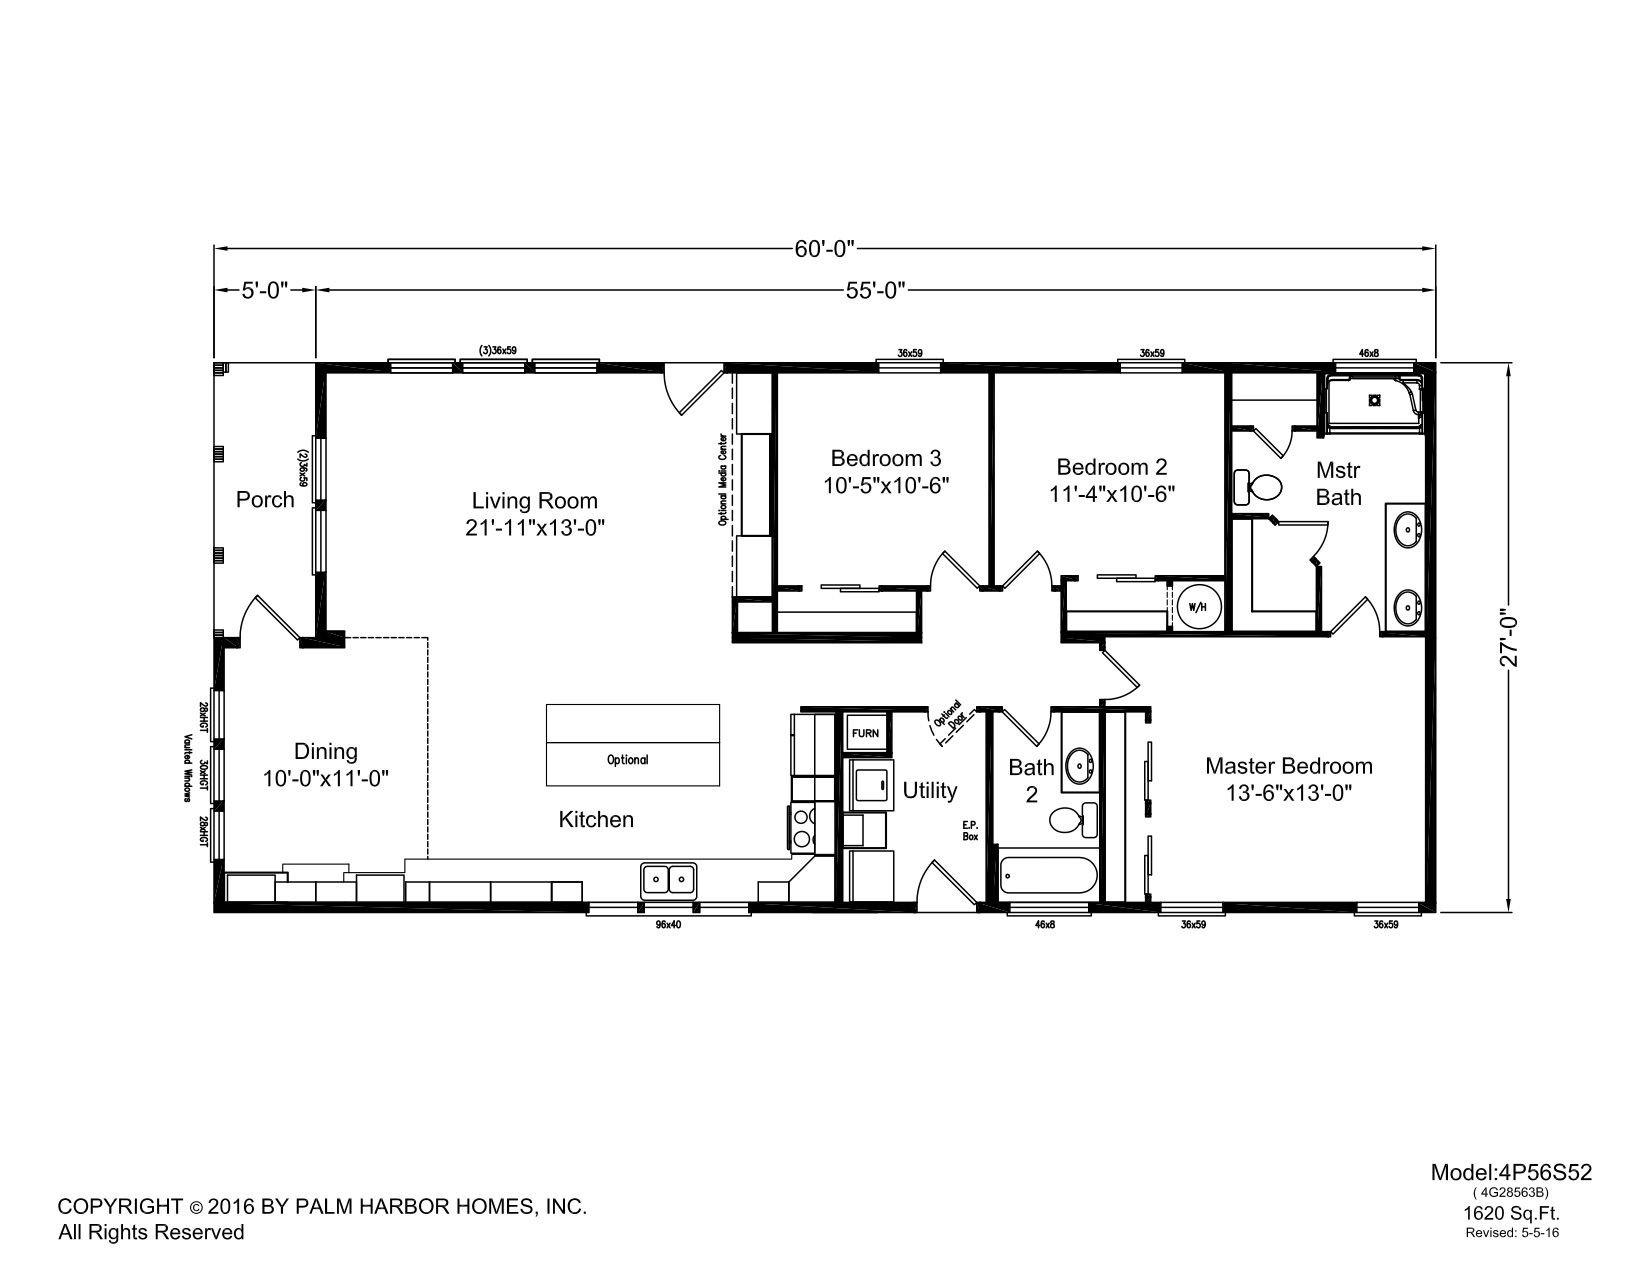 Homes Direct Modular Homes - Model 3104G28563B - Floorplan